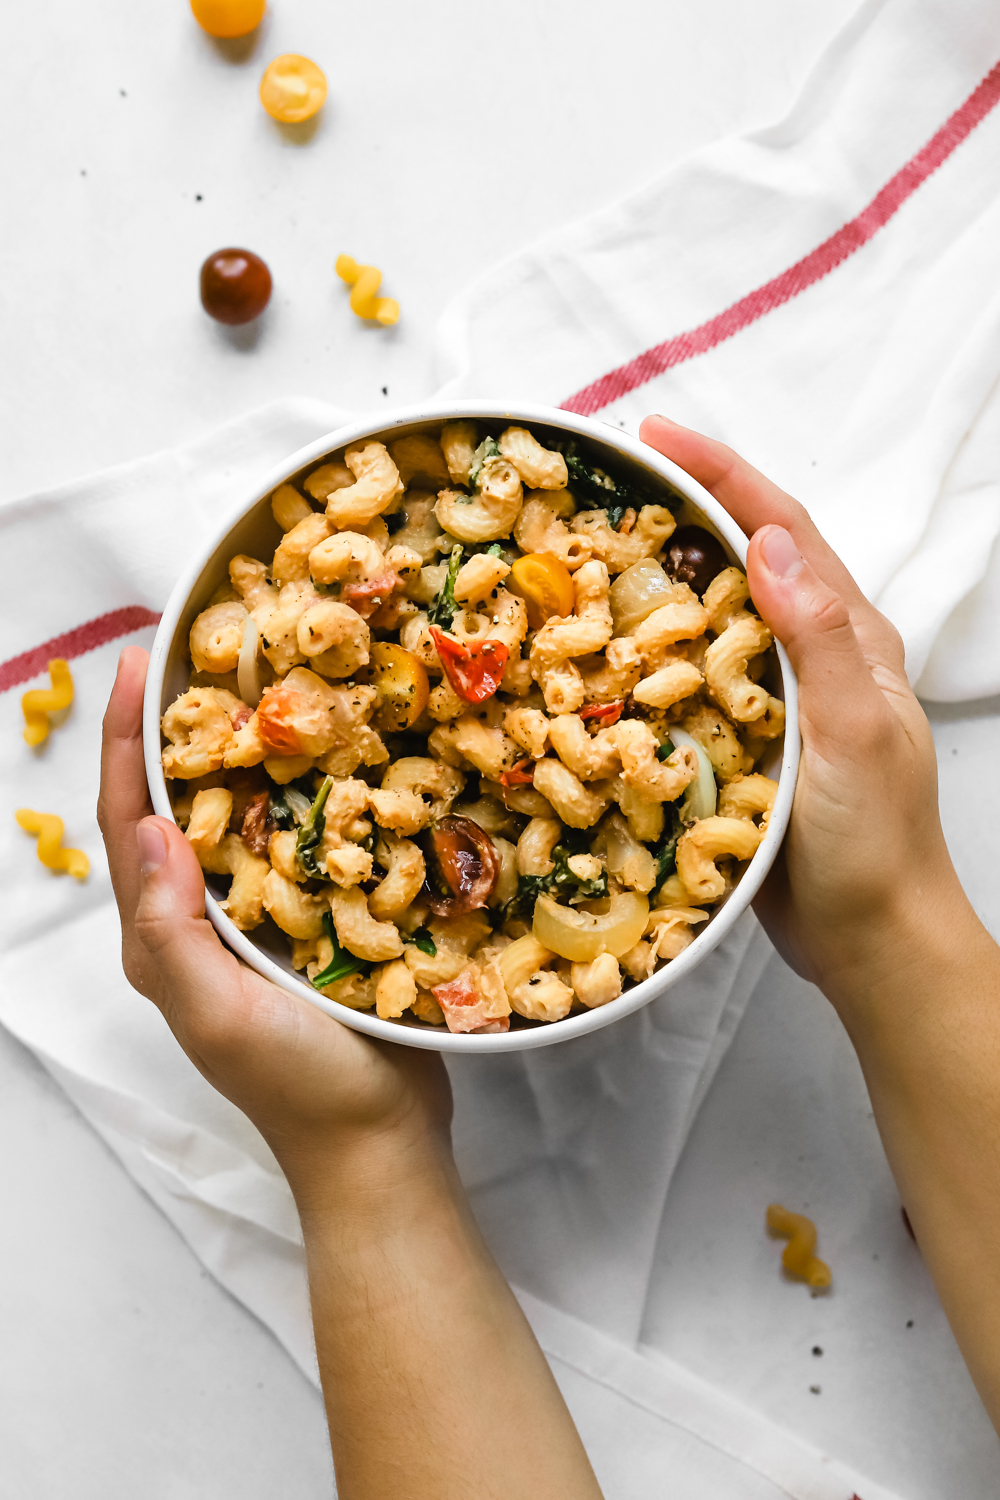 Hands holding a bowl of vegan hummus pasta with veggies.